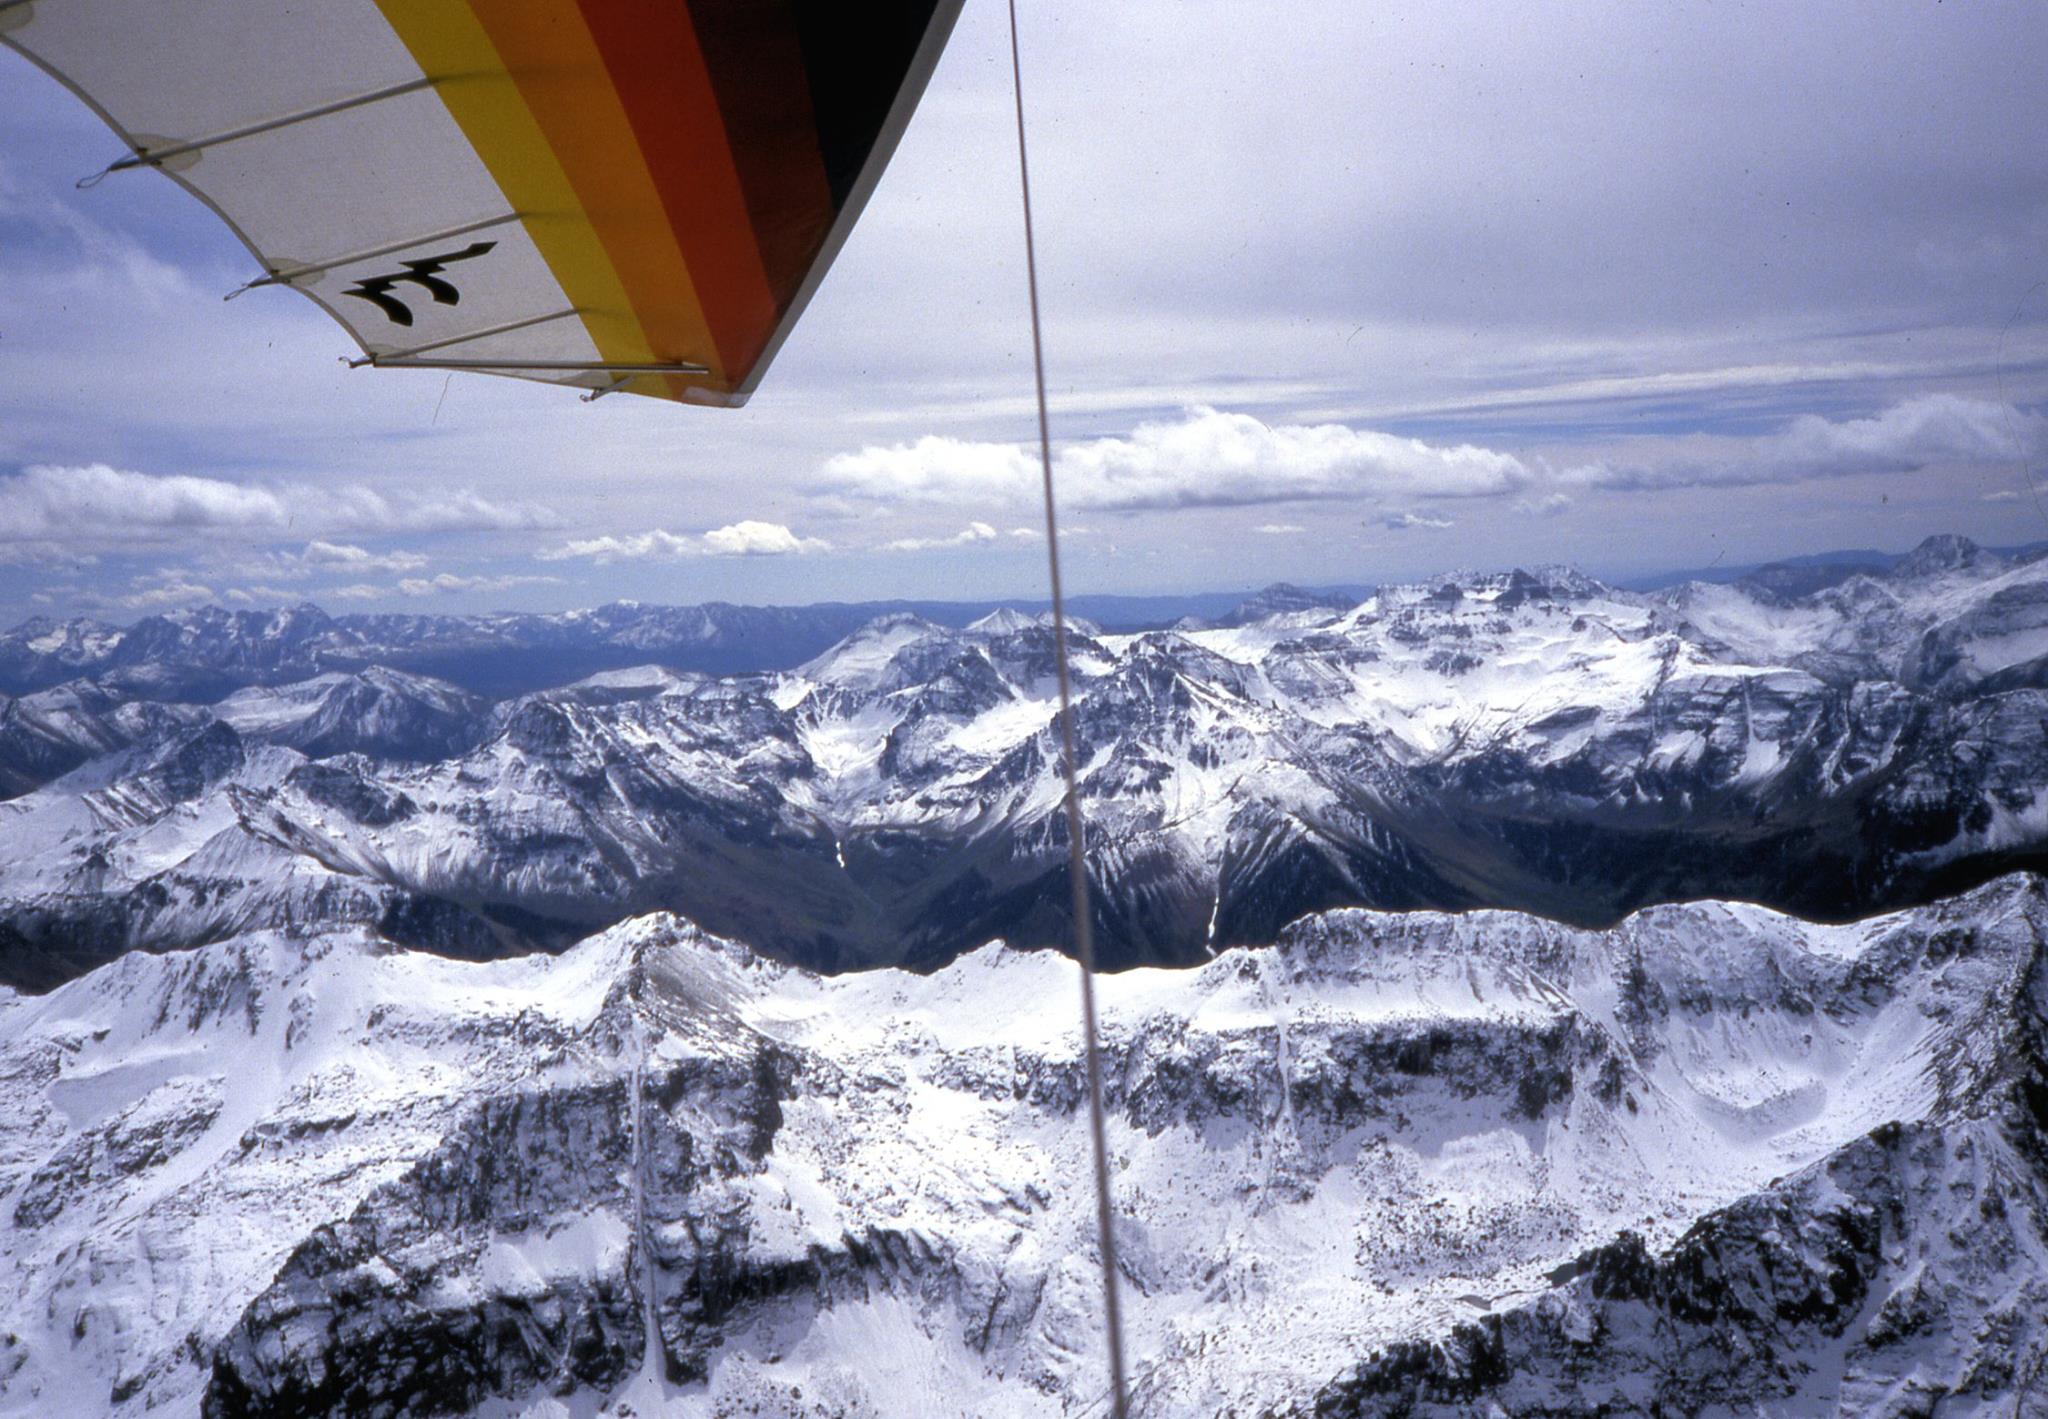 Paul Voight flying lat summer above Telluride.